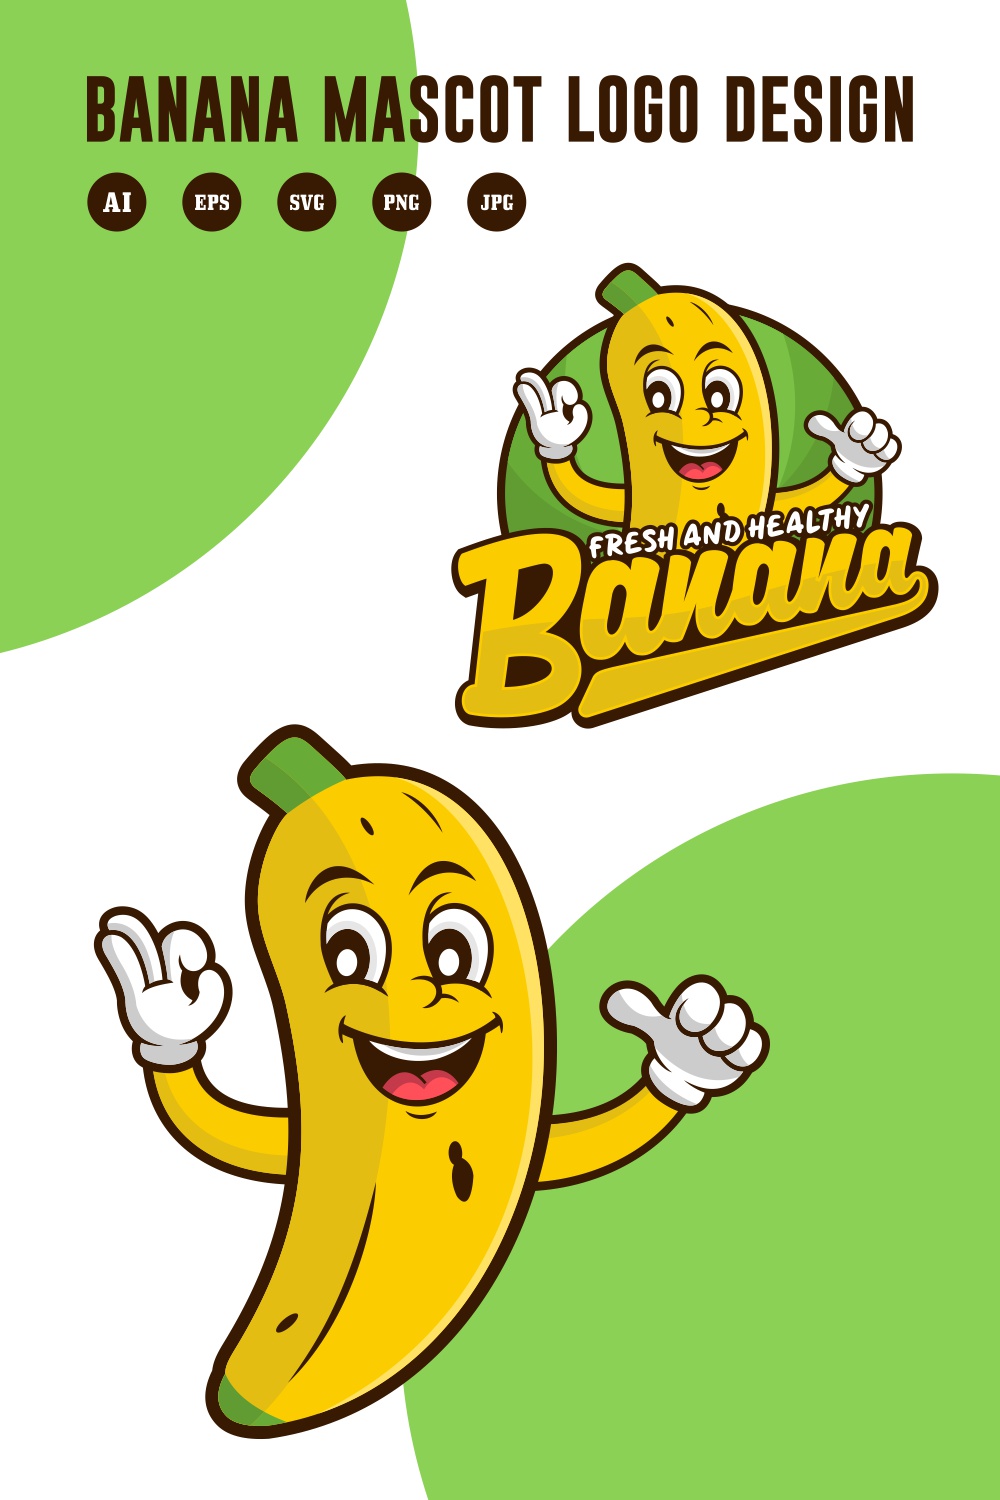 Set Banana mascot fresh and healthy Logo design - $6 pinterest preview image.